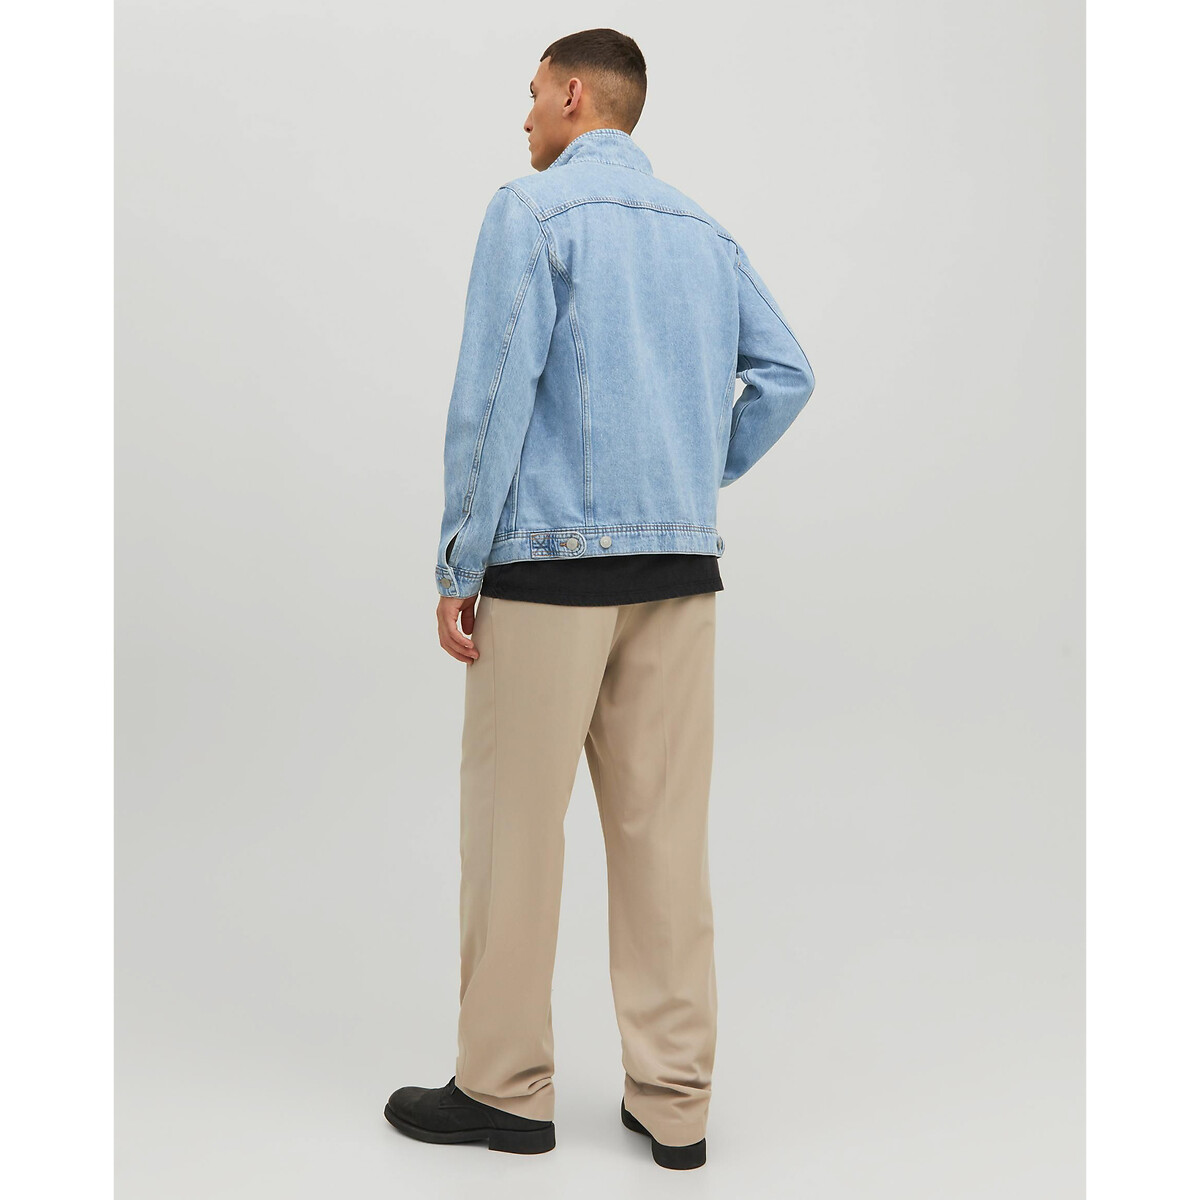 Куртка Из джинсовой ткани XXL синий LaRedoute, размер XXL - фото 5